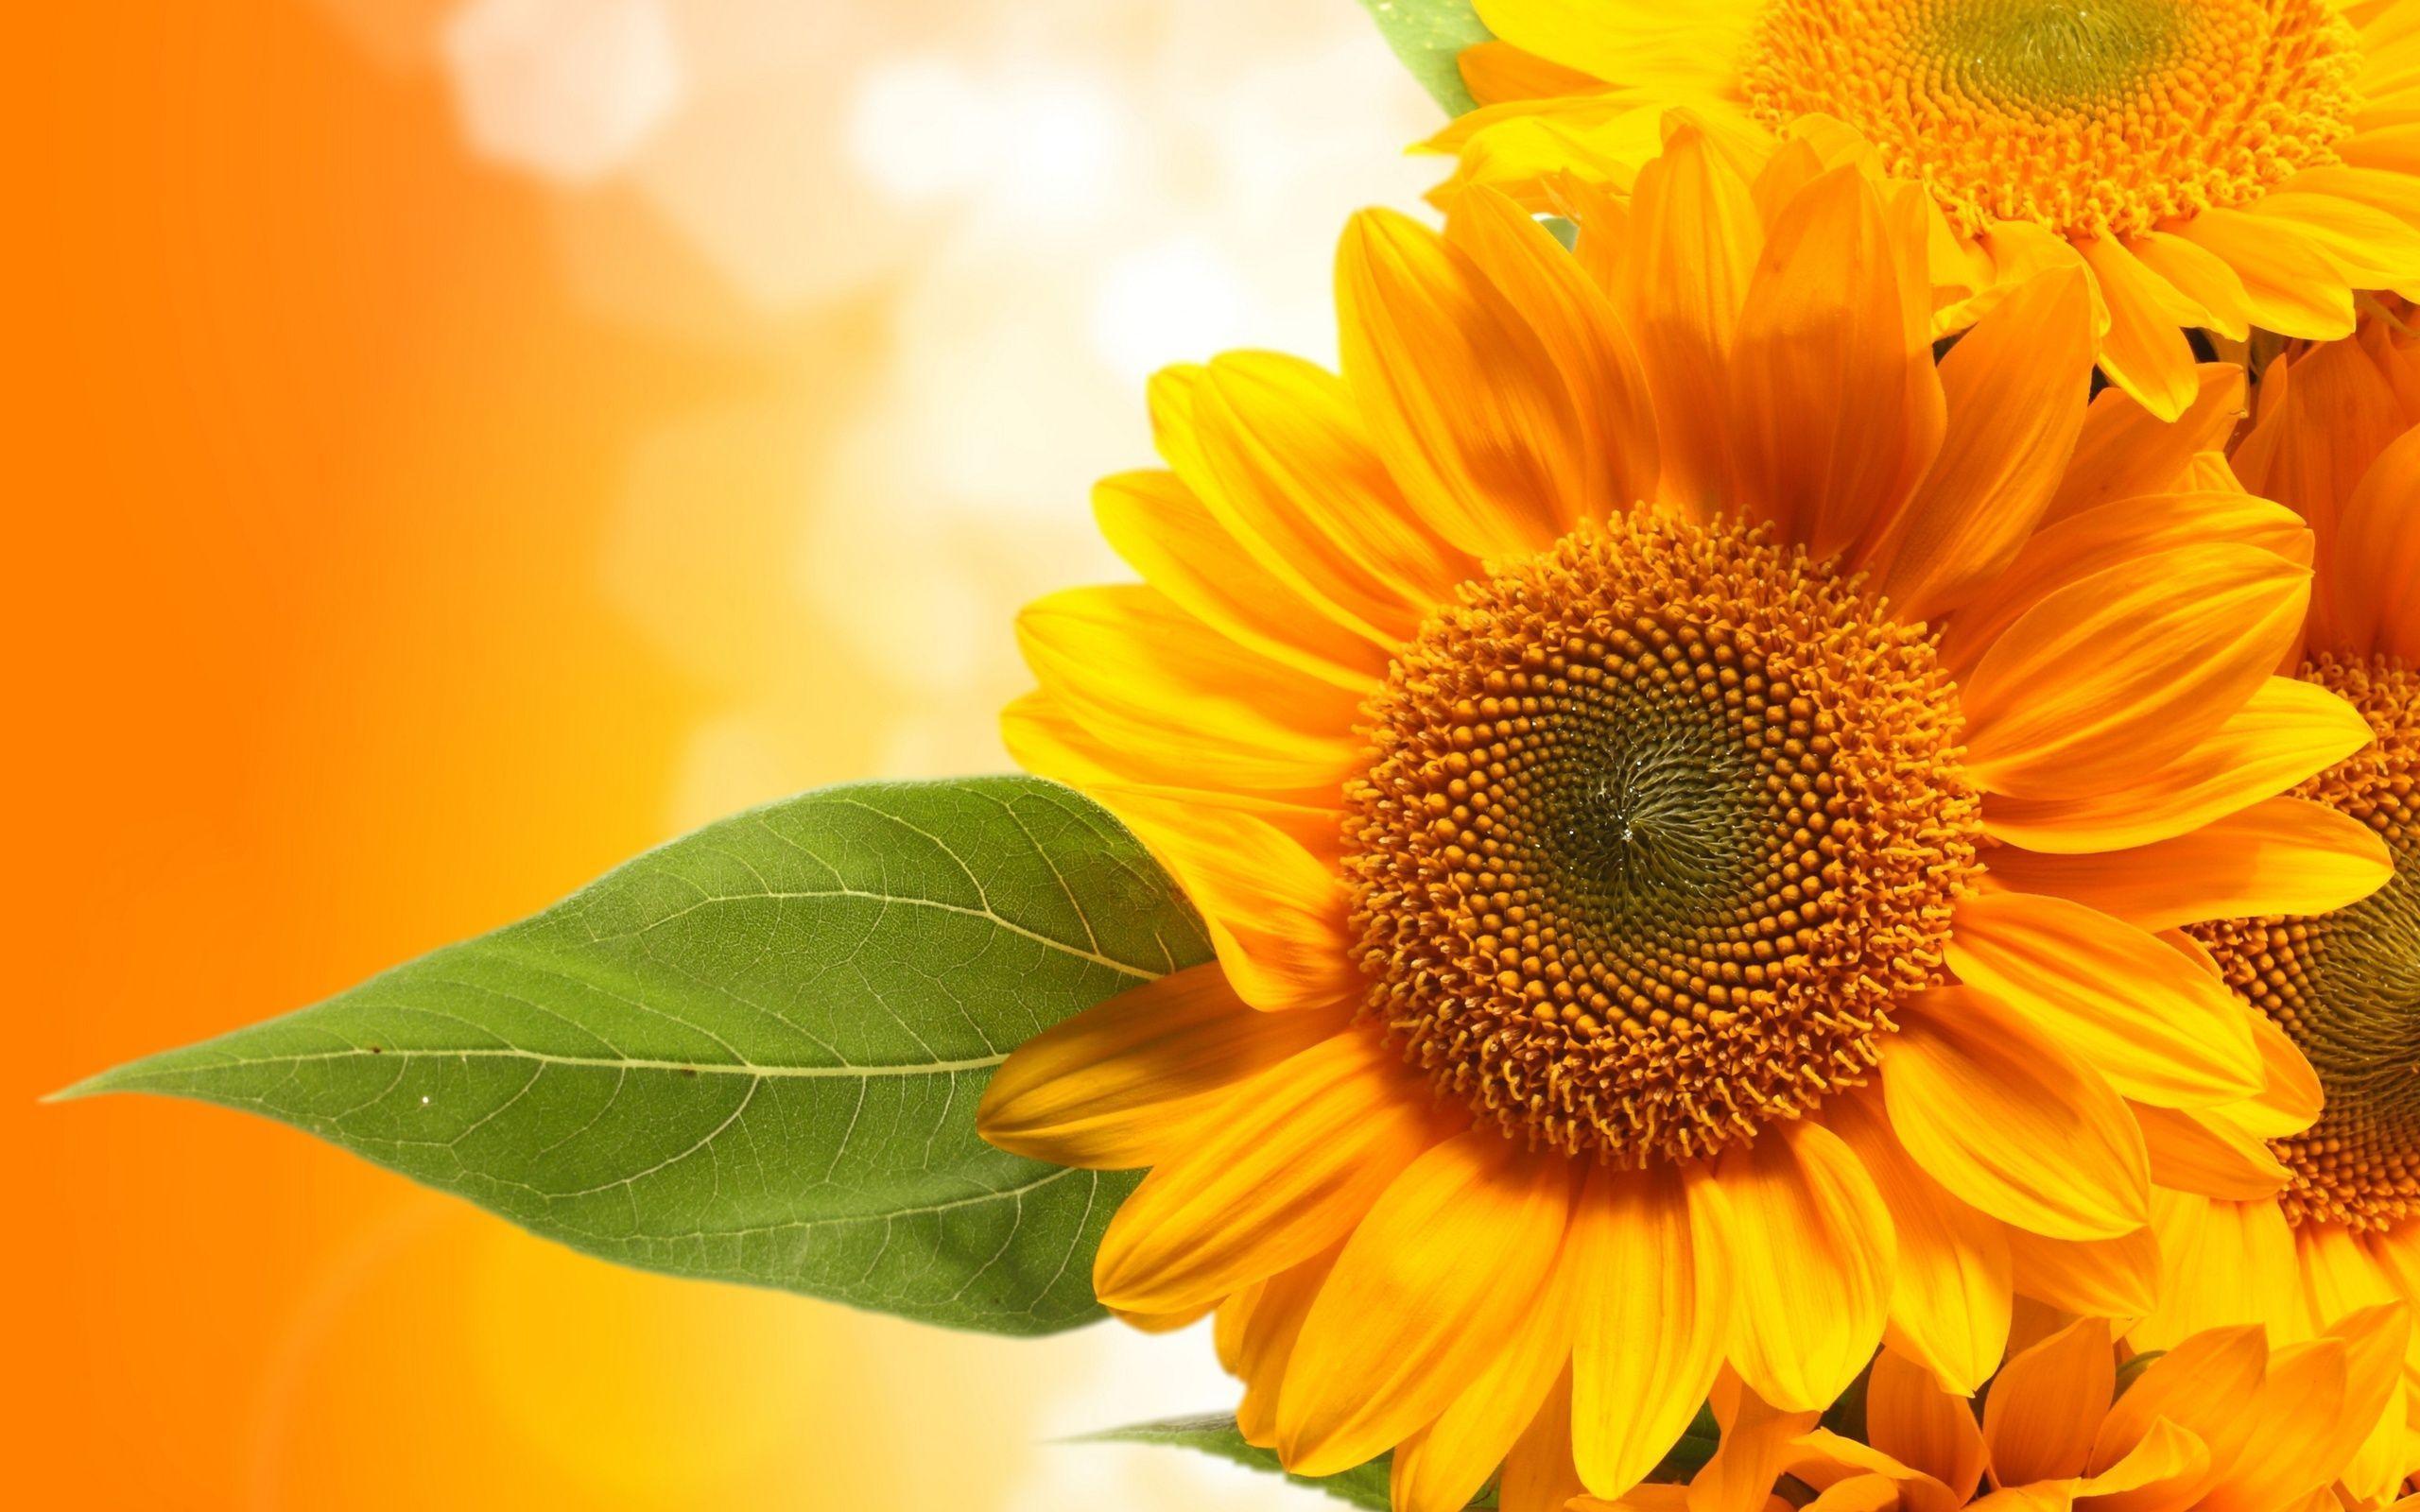 Sunflower desktop wallpaper for latest model computer screens